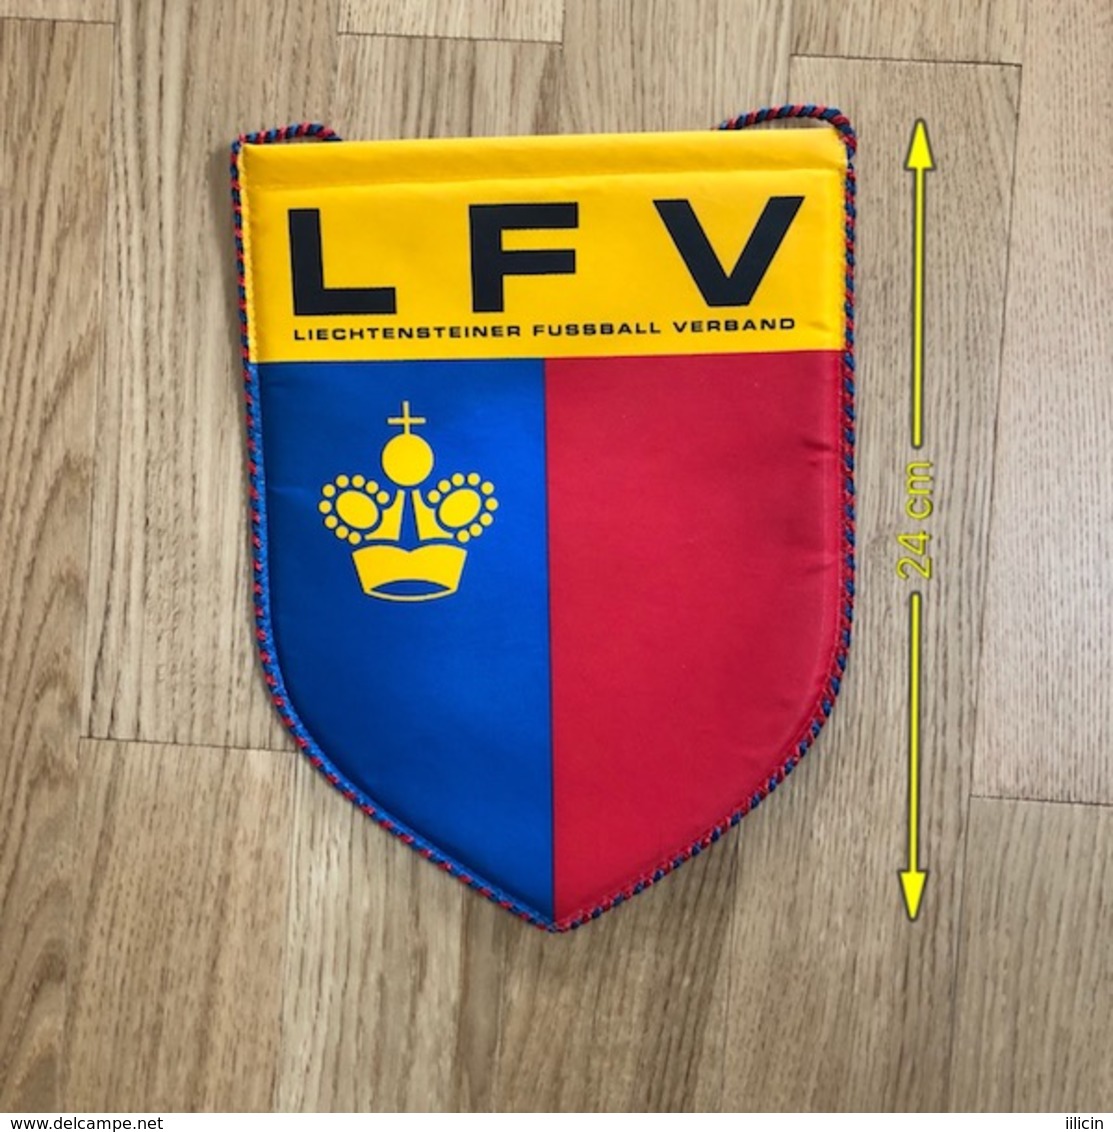 Flag (Pennant / Banderín) ZA000138 - Football (Soccer / Calcio) Liechtenstein LFV Federation (Association Union) - Habillement, Souvenirs & Autres